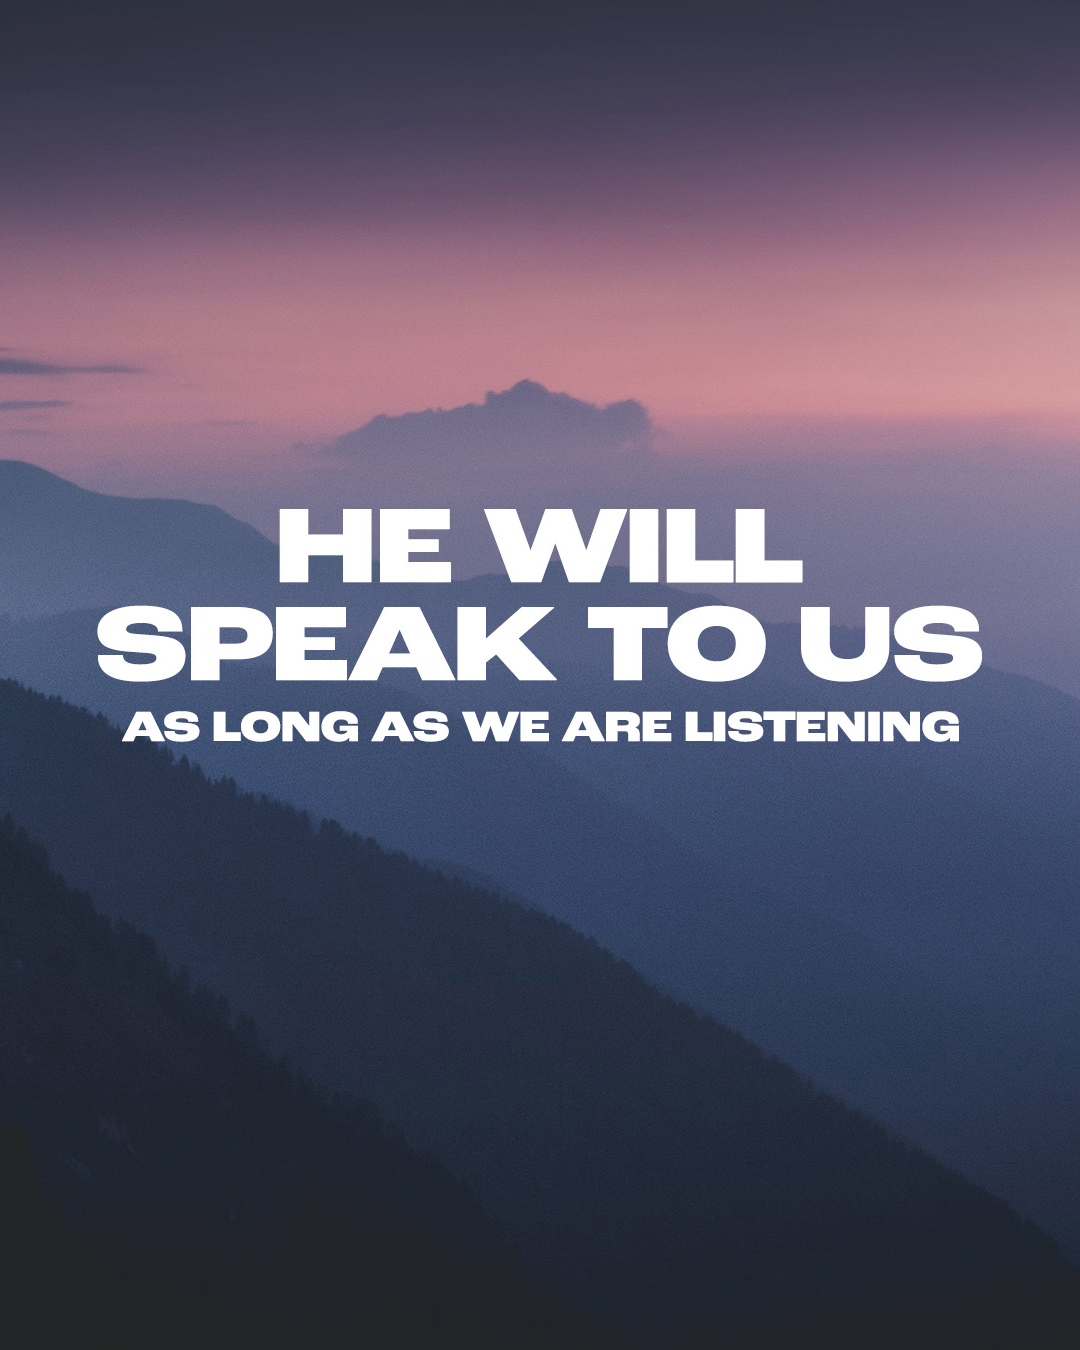 He will speak